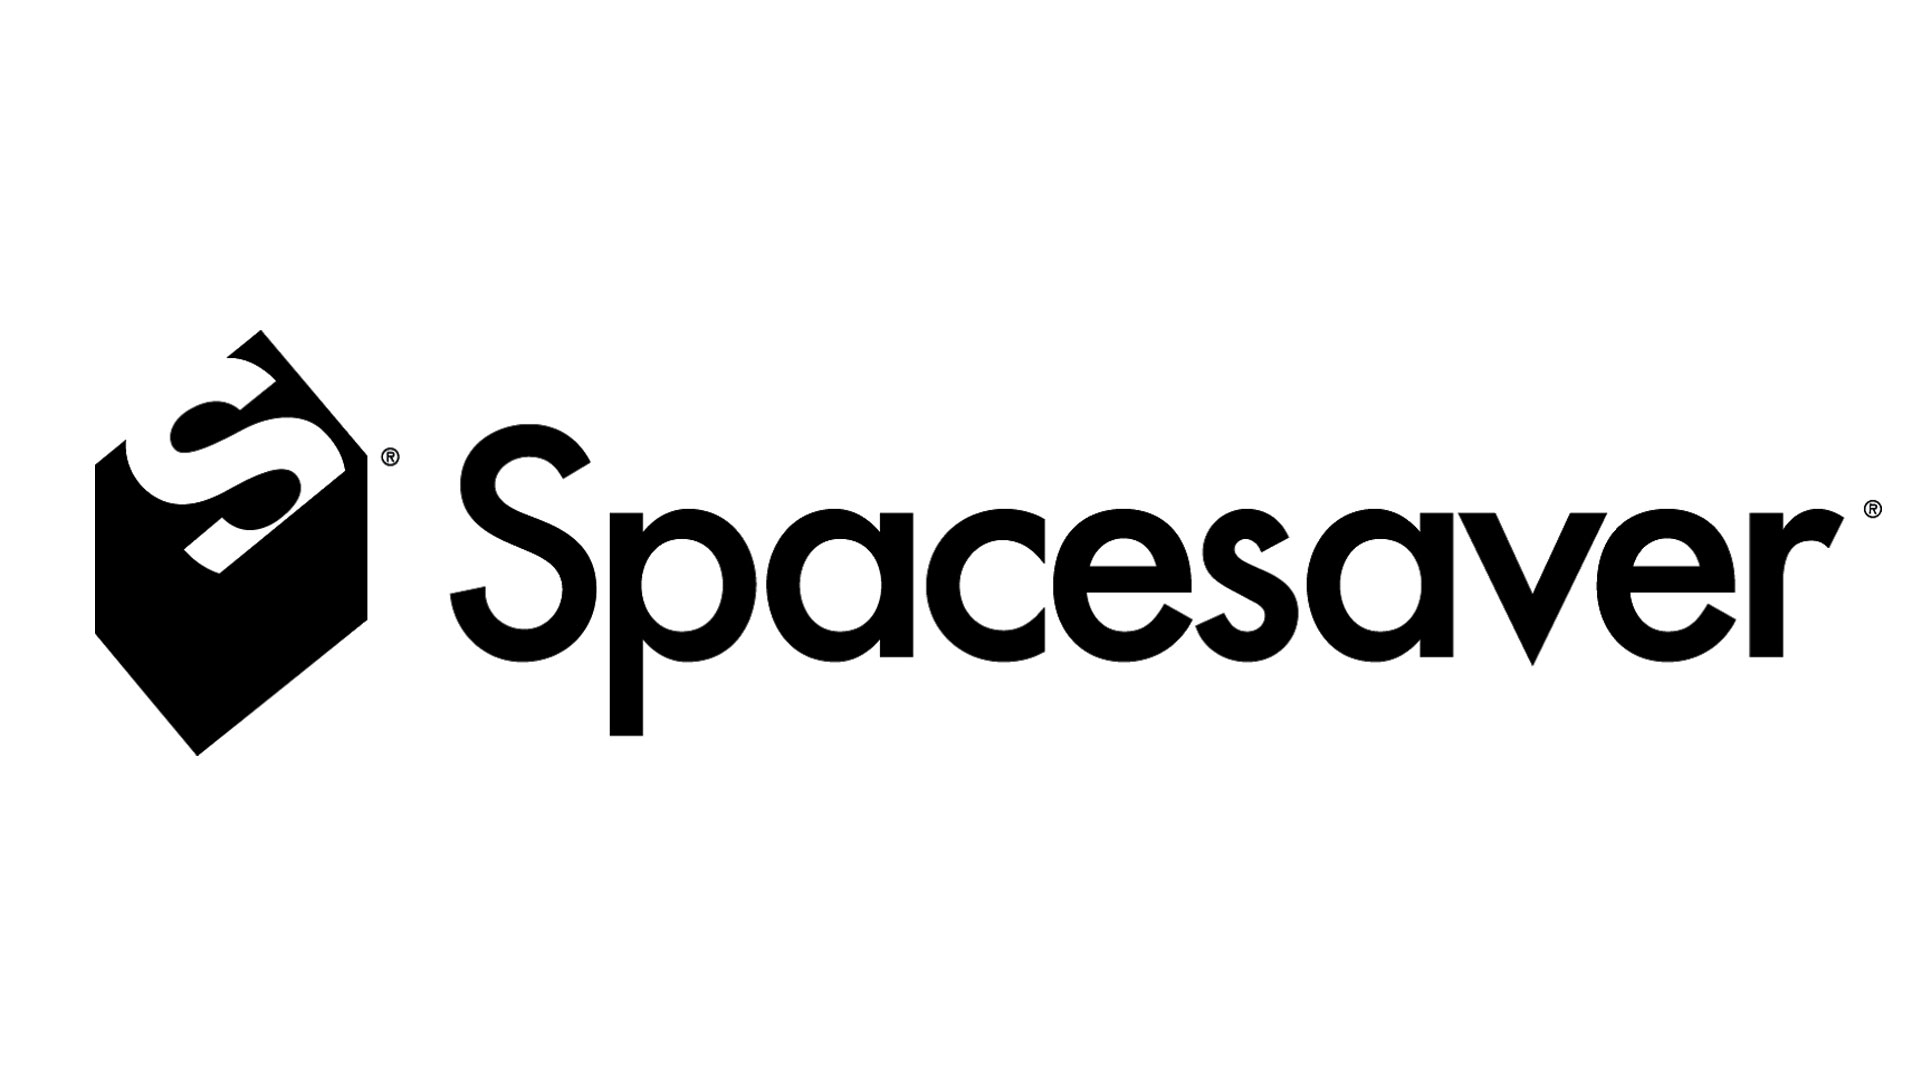 Spacesaver